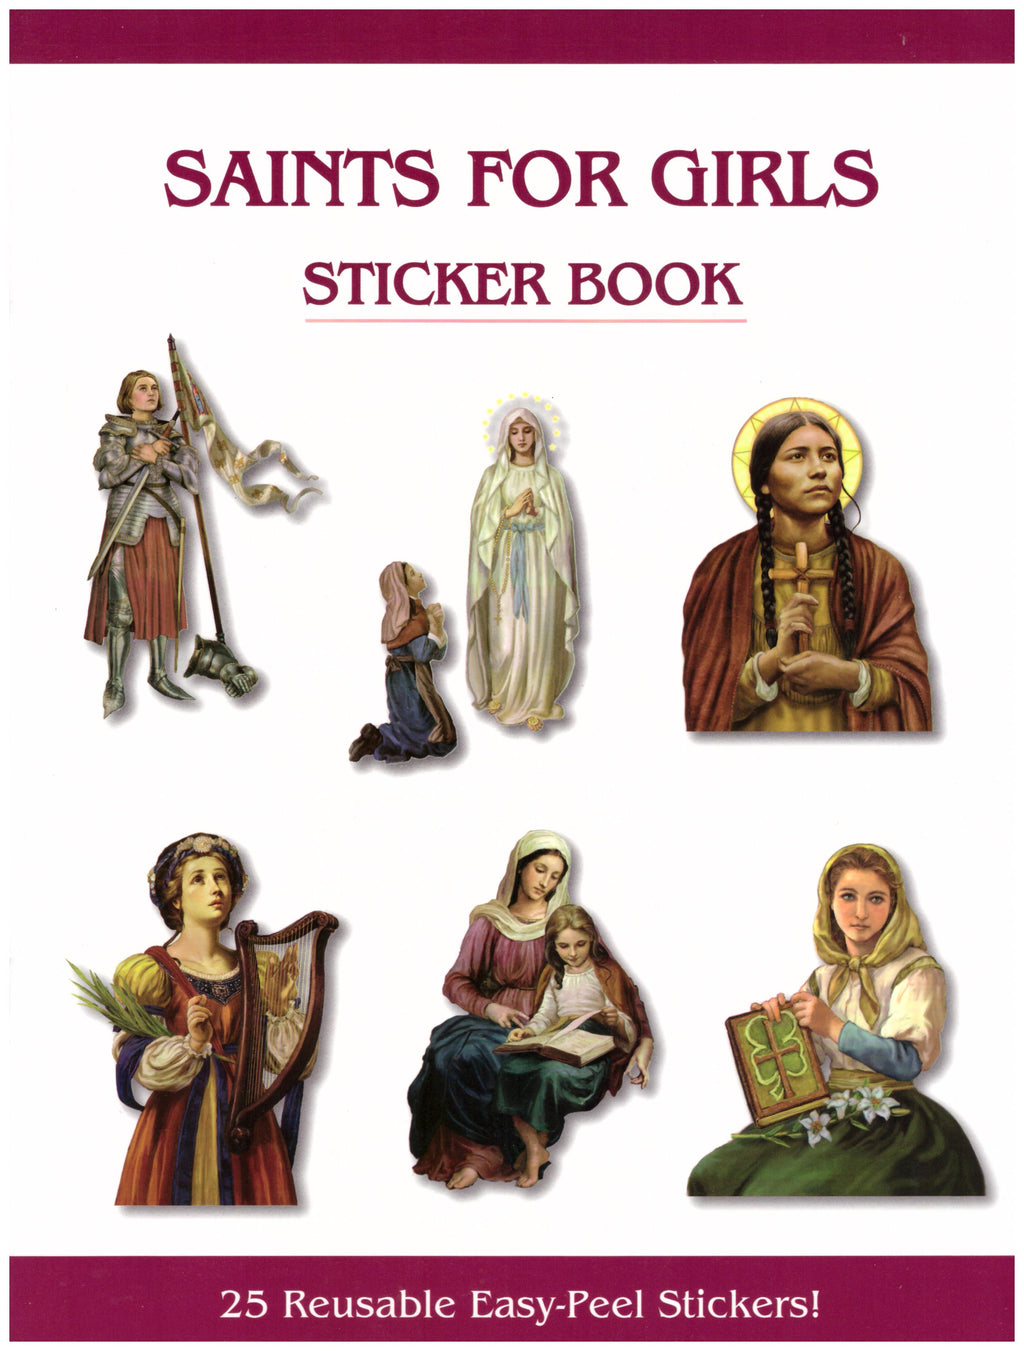 SAINTS FOR GIRLS STICKER BOOK